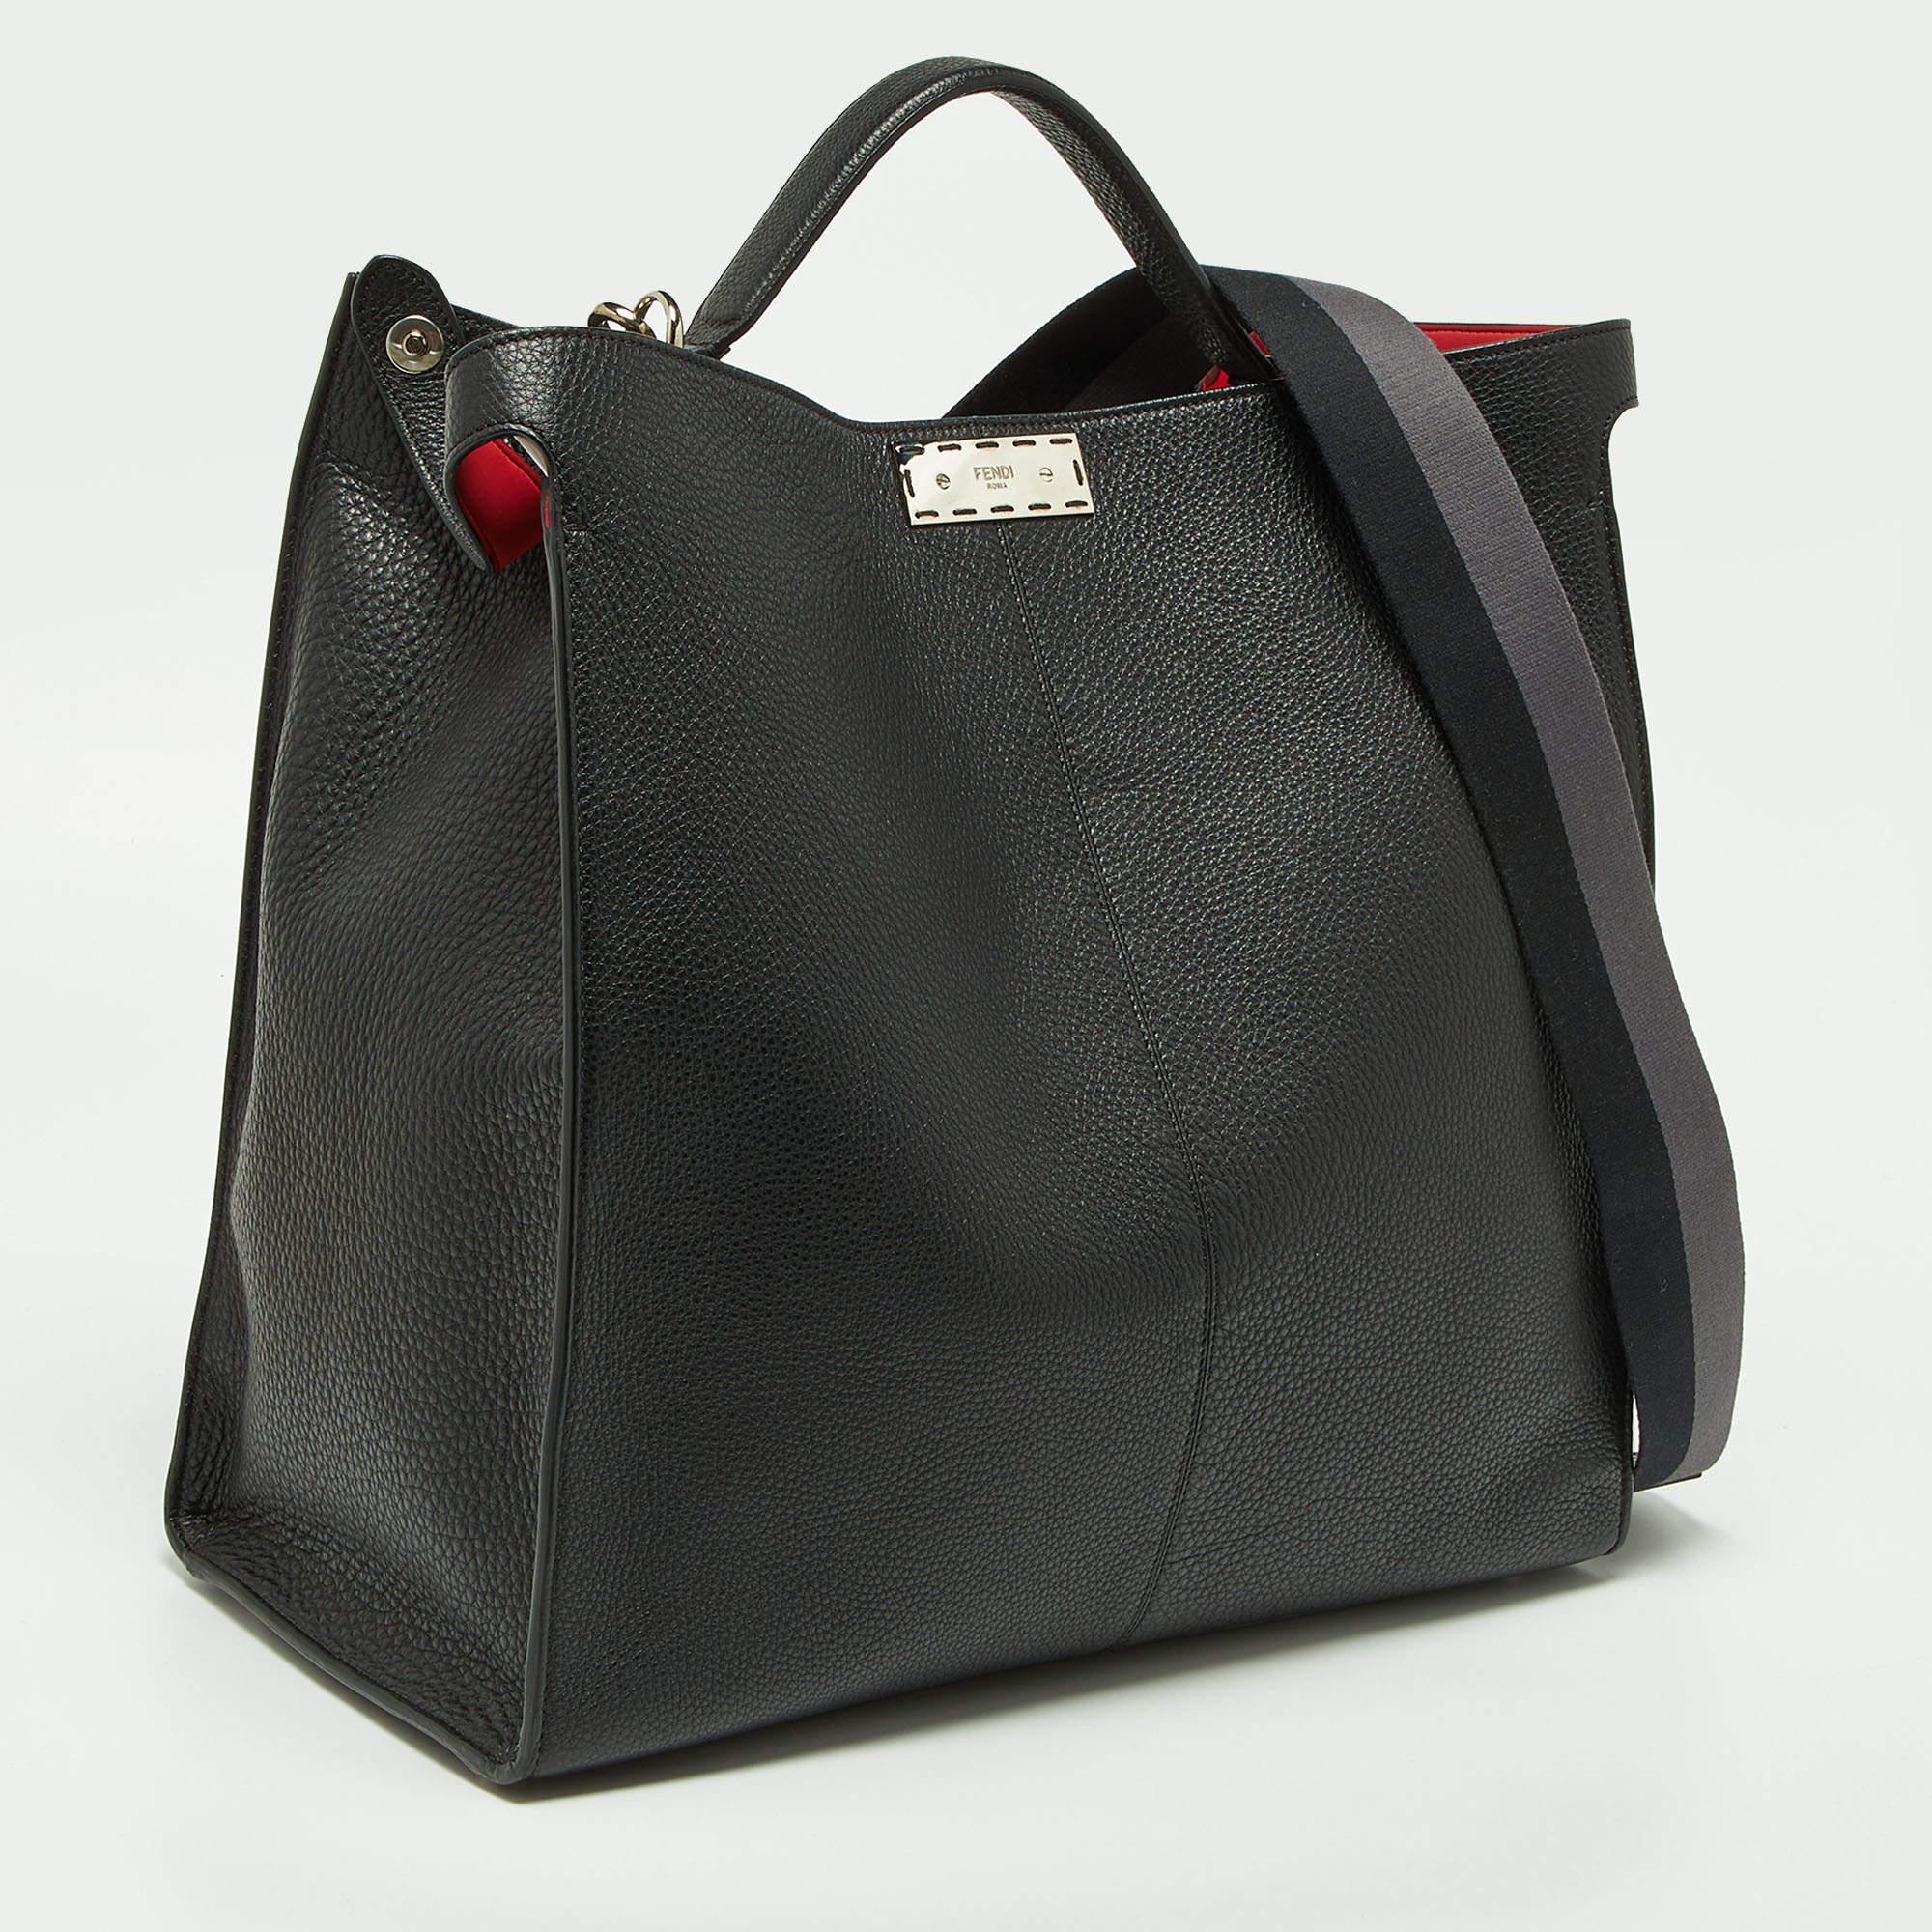 Fendi Black Leather Regular Peekaboo X Lite Top Handle Bag In Excellent Condition For Sale In Dubai, Al Qouz 2